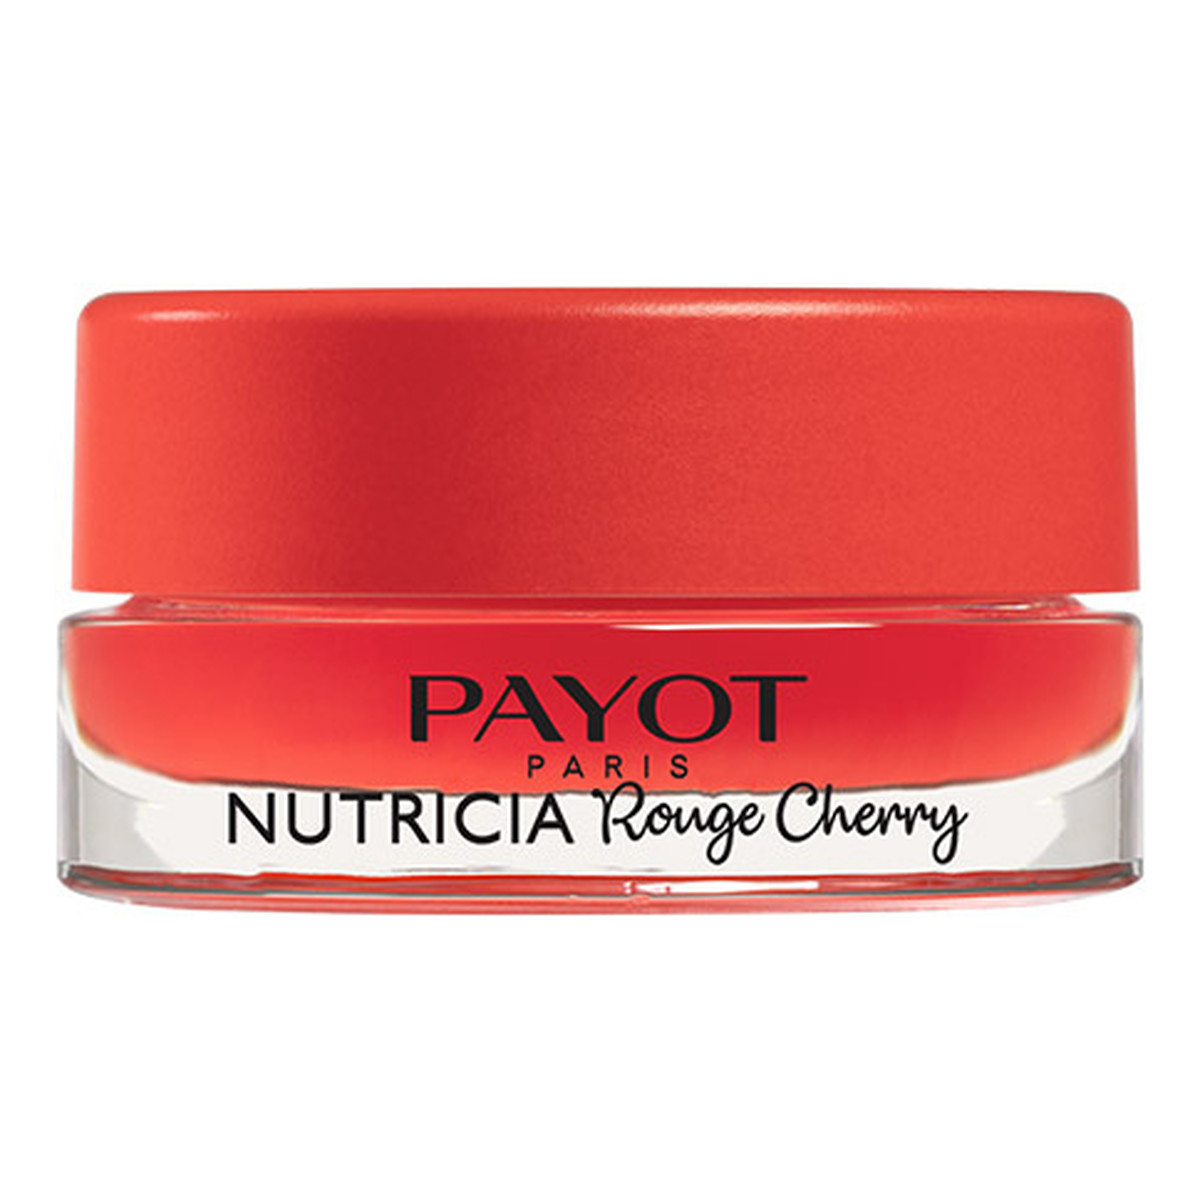 Payot Nutricia Enhancing Nourishing Lip Balm Balsam do ust cherry red 6g